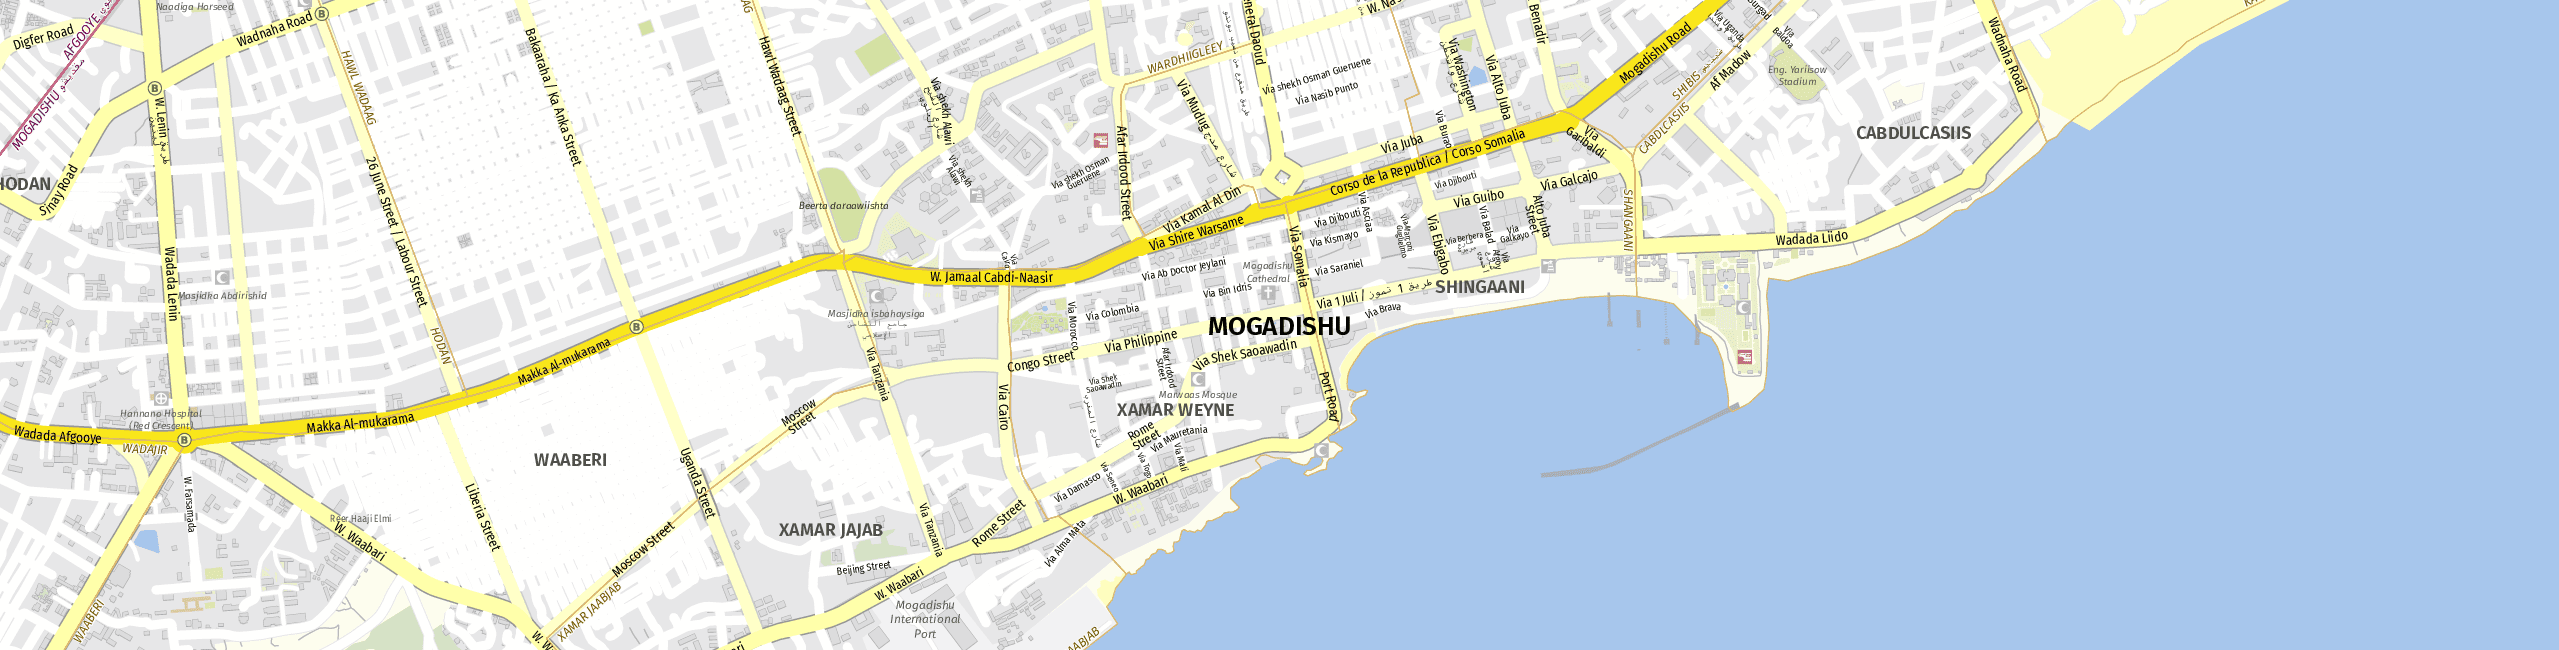 Stadtplan Mogadischu zum Downloaden.